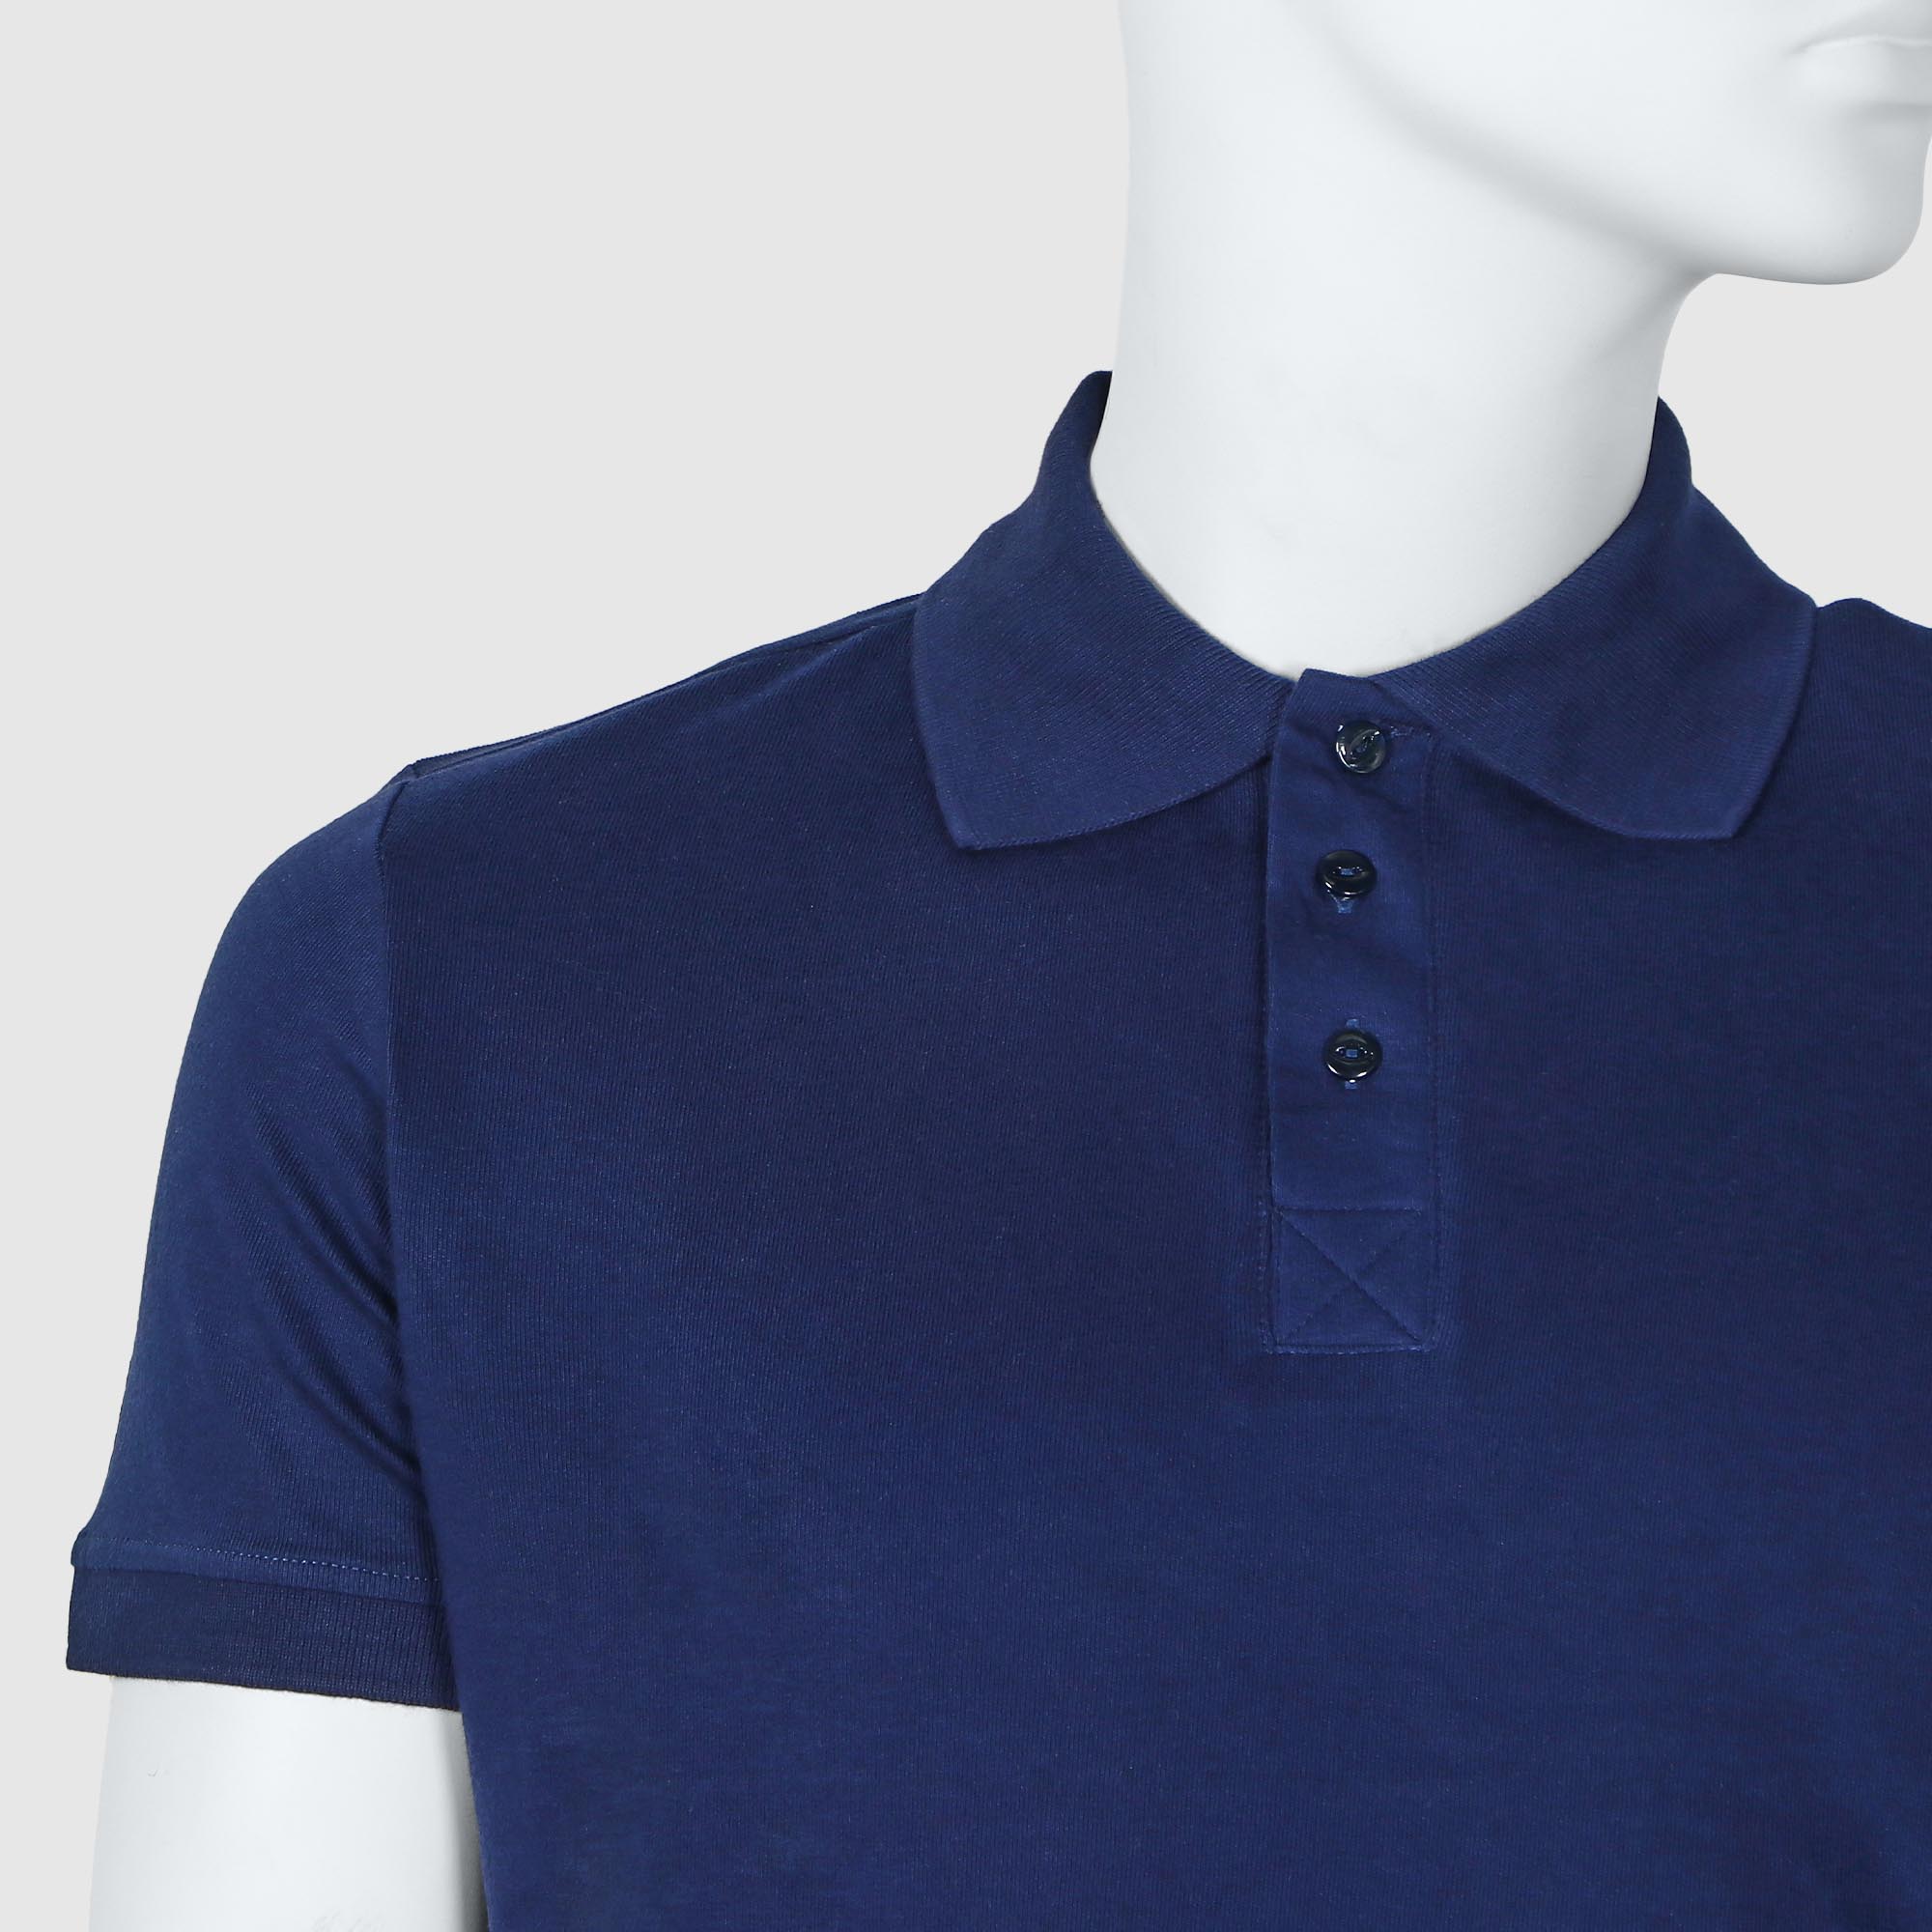 Мужская футболка-поло Diva Teks синяя (DTD-10), цвет синий, размер 48-50 - фото 3